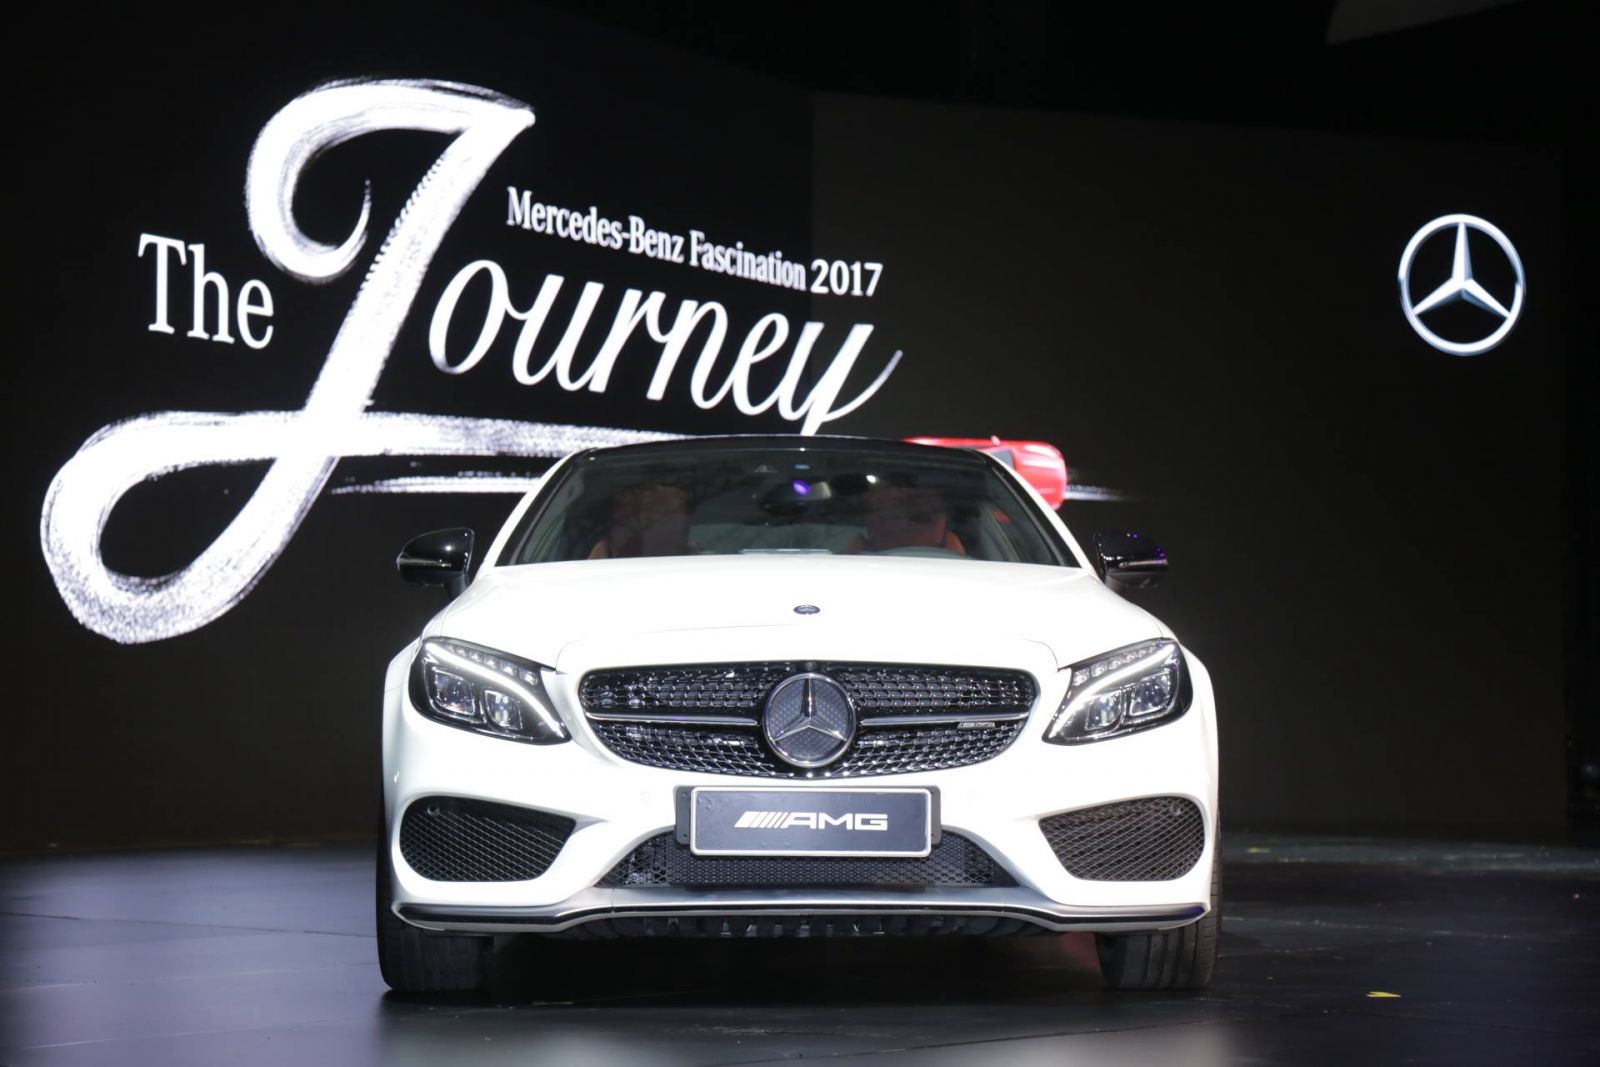 Mercedes-Benz Fascination 2017: The journey of satisfaction